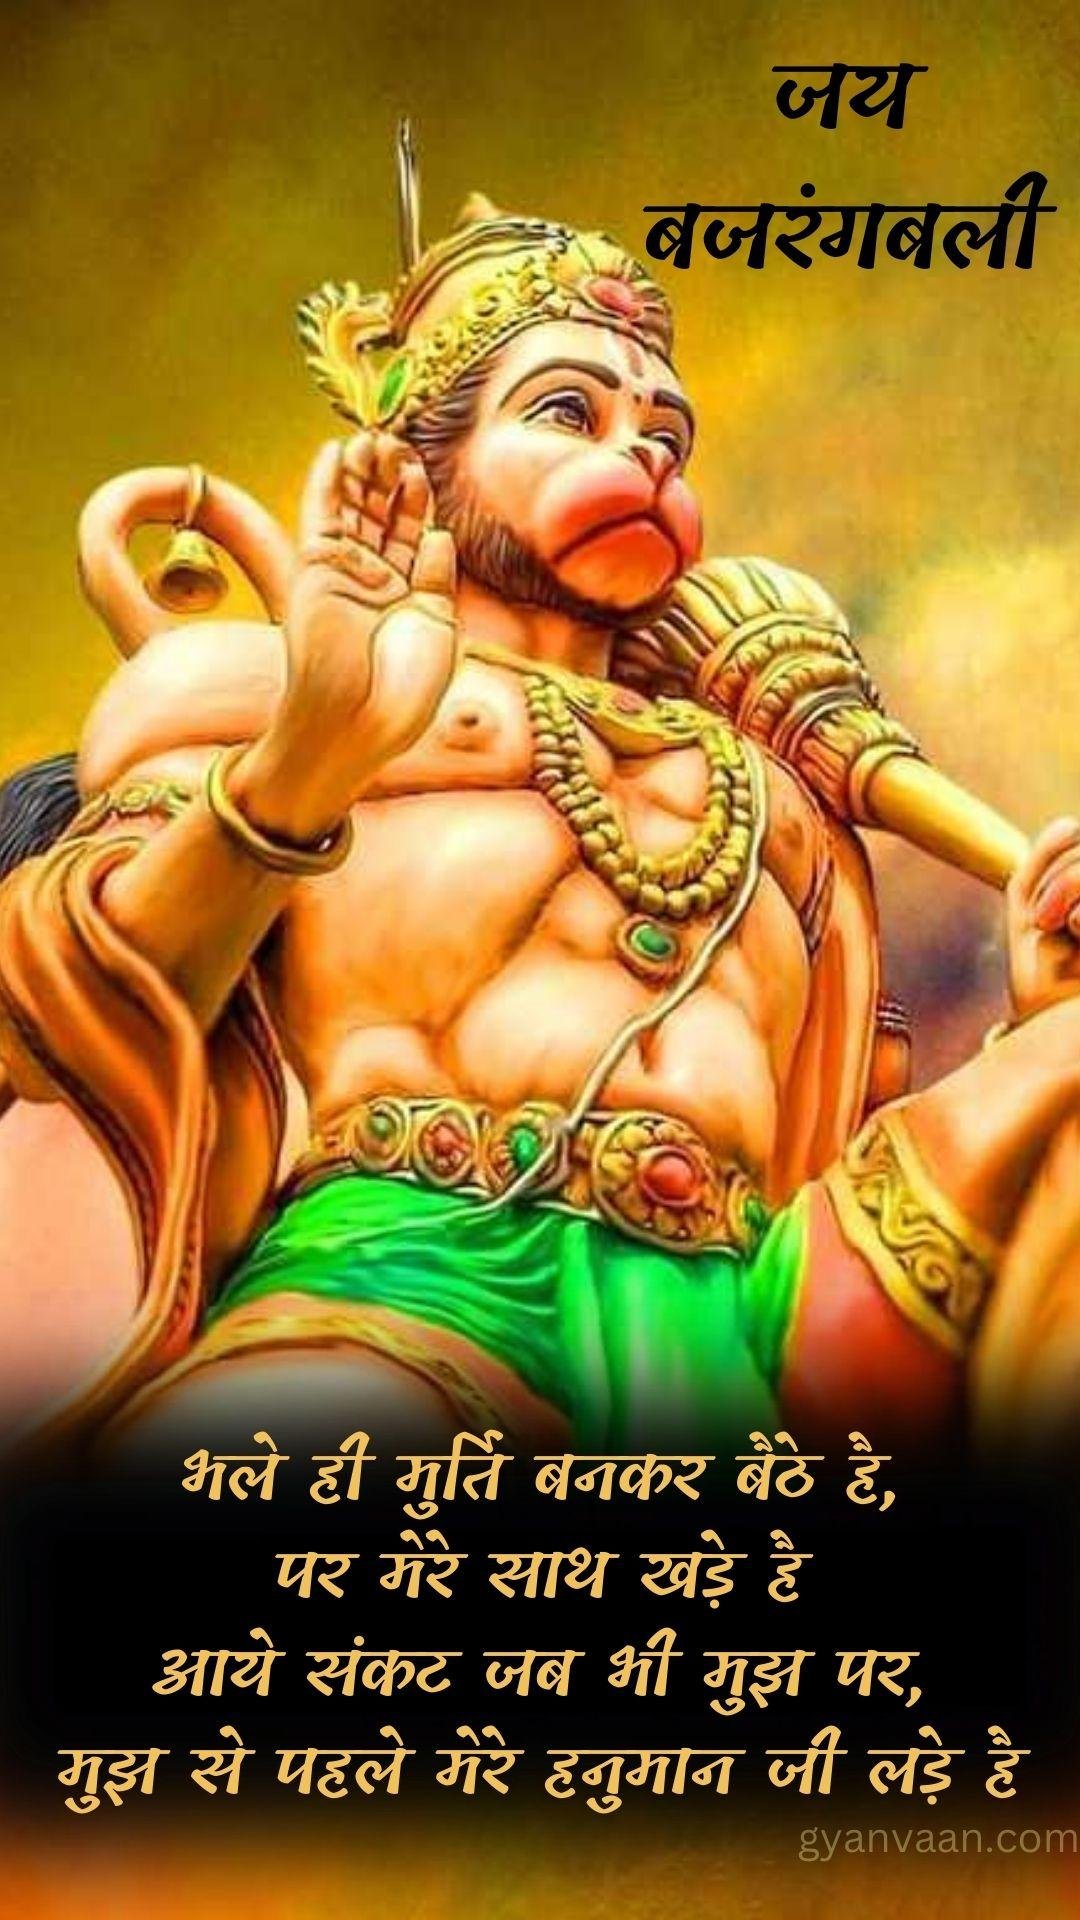 Hanuman Quotes Shayari And Whatsapp Status For Mobile With Hanuman Images And Photos 44 - Hanuman Images